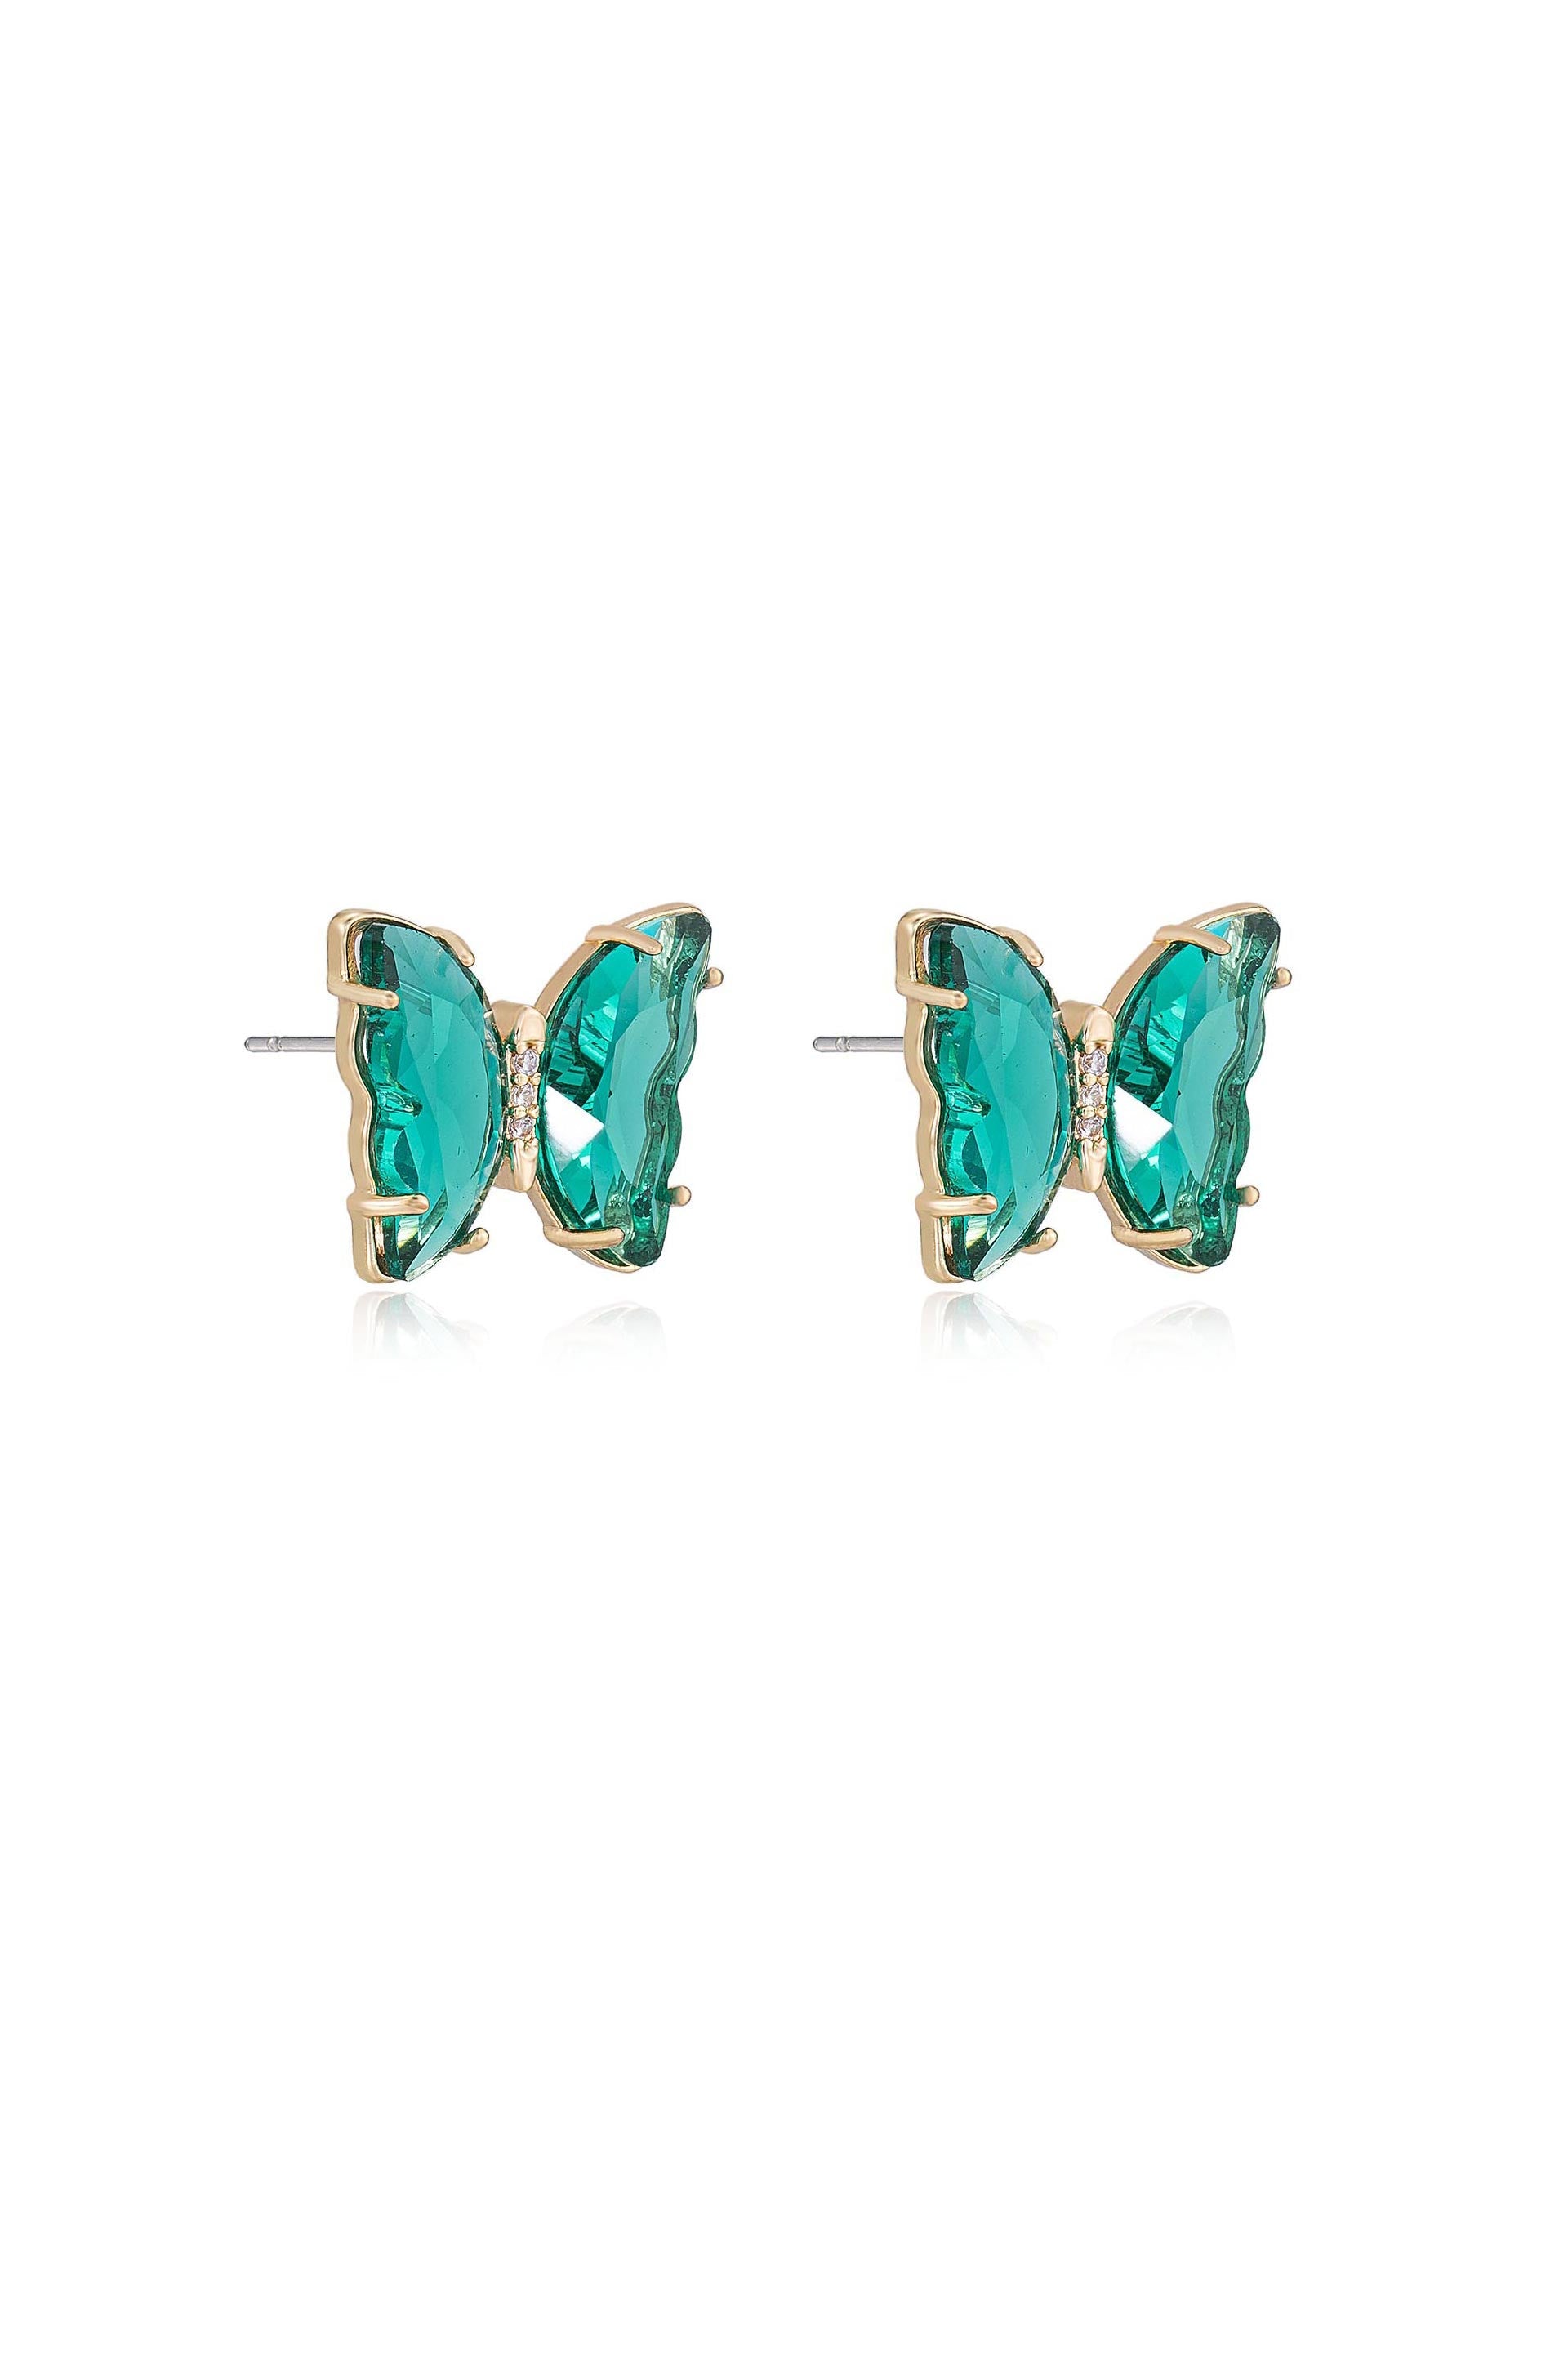 Flutter Away Crystal Earrings - Premium Earrings from Ettika - Just $35! Shop now at Tooksie